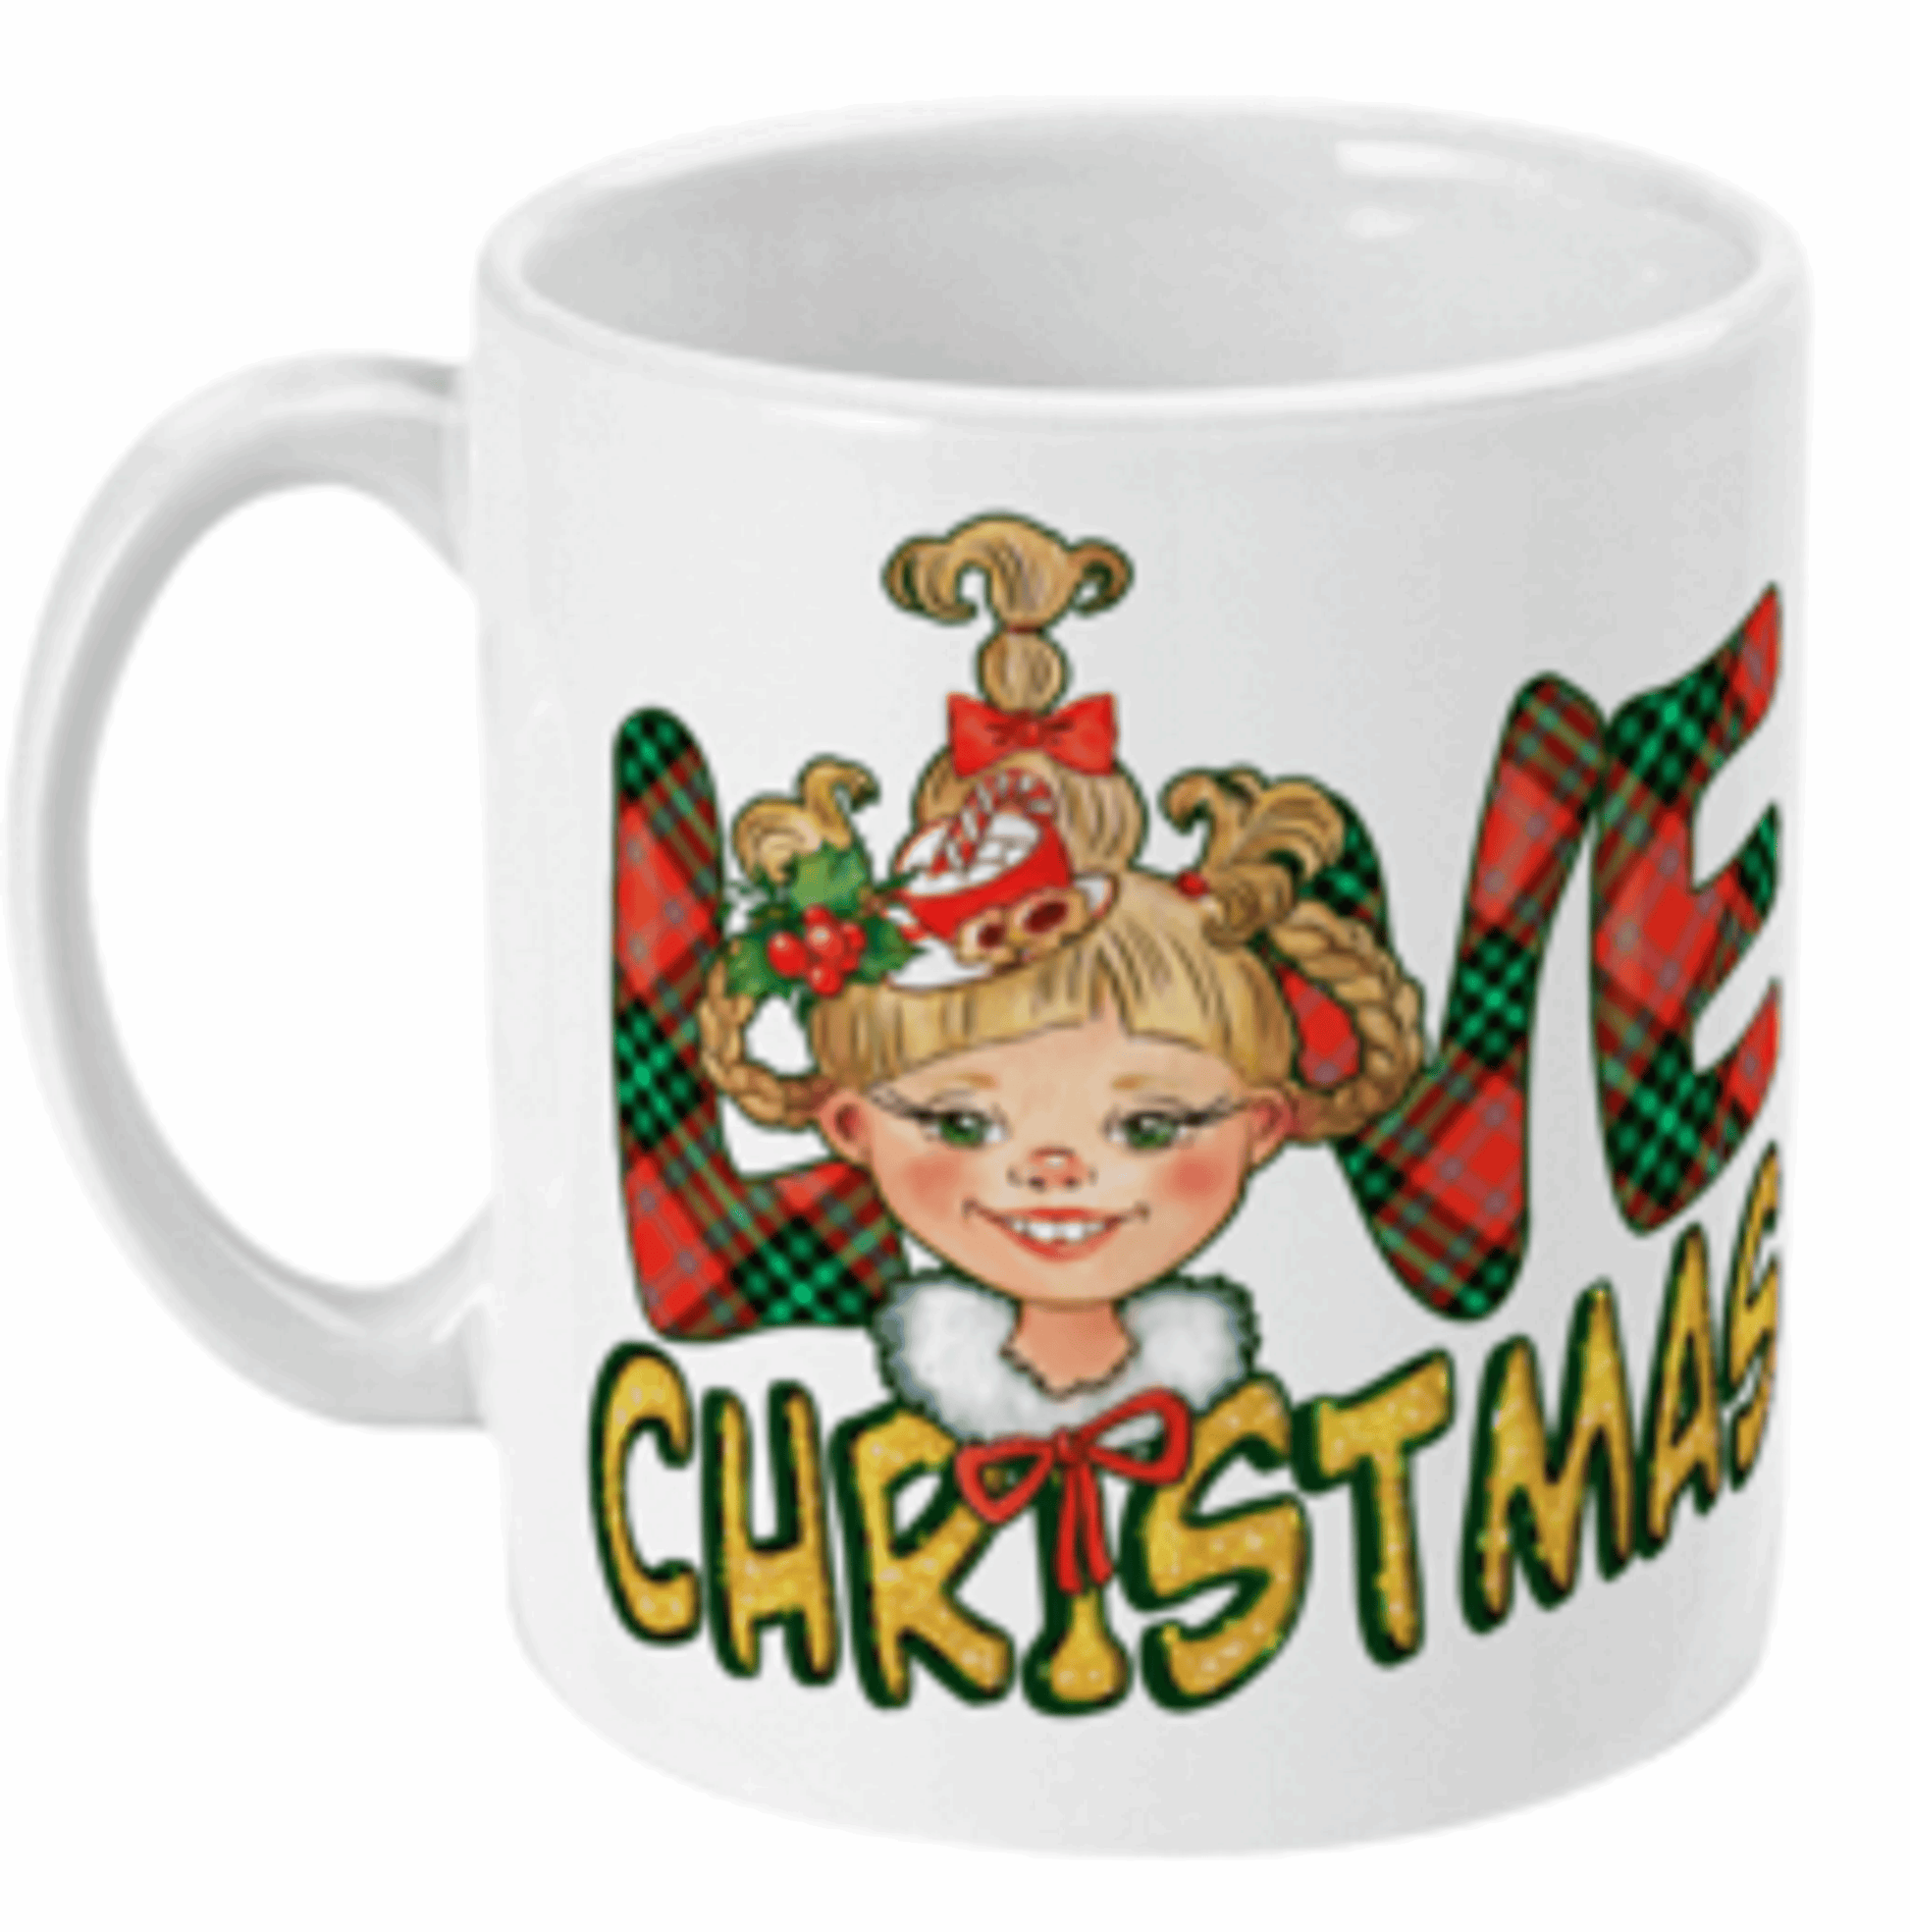  Festive Love Christmas Coffee or Tea Mug by Free Spirit Accessories sold by Free Spirit Accessories